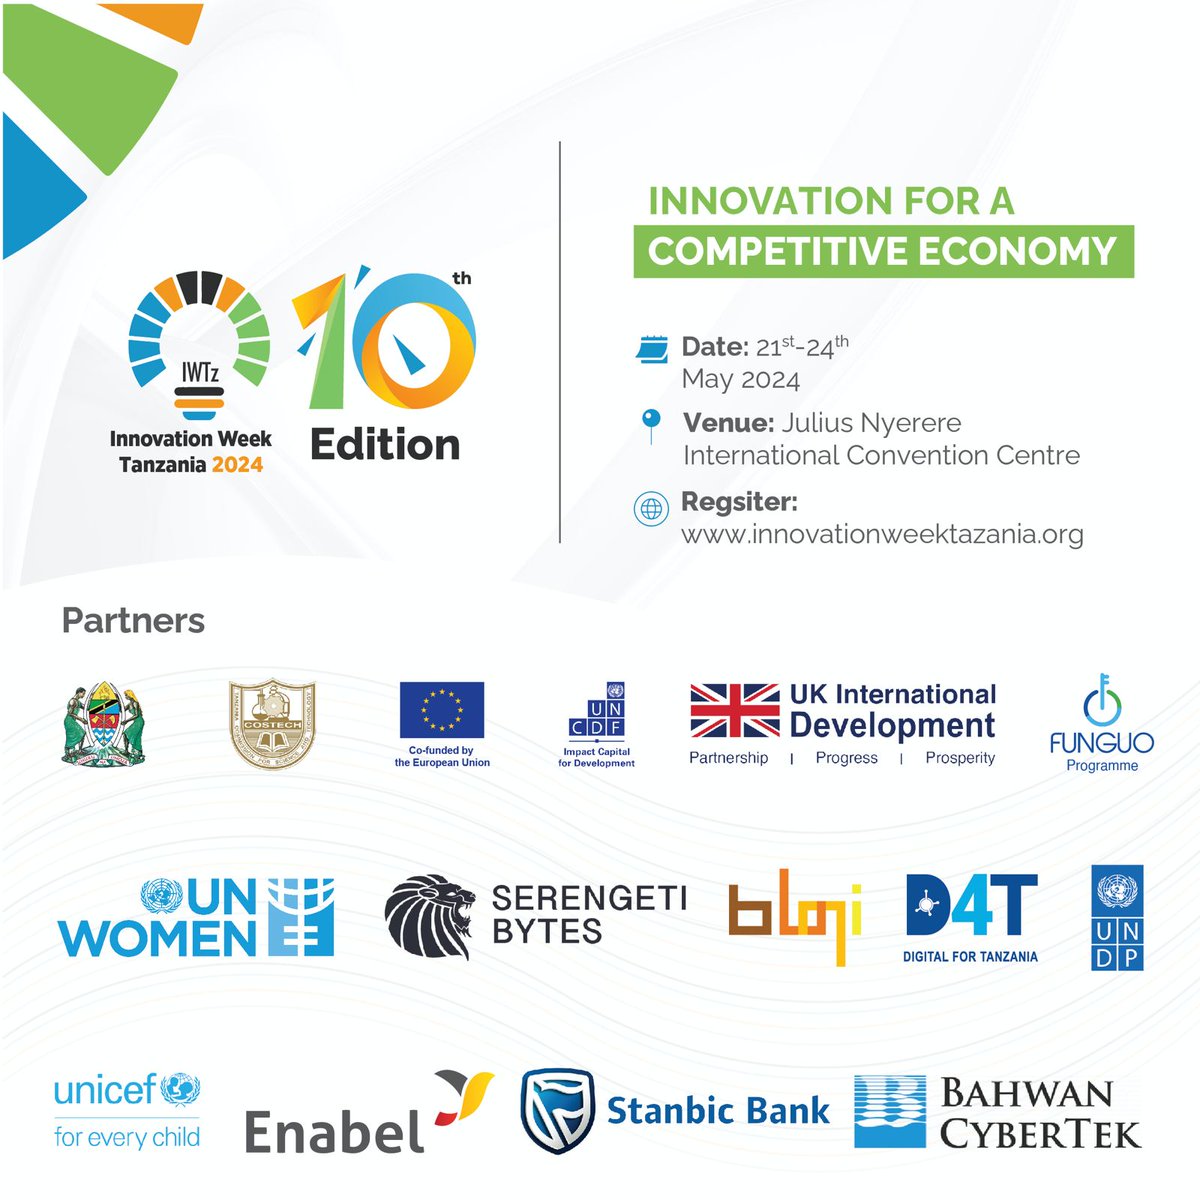 We are proud to announce the official partners for Innovation Week Tanzania 2024! @Undptz @costechTANZANIA @UNICEFTanzania @UNCDFdigital @unwomentanzania @Enabel_Belgium @serengetibytes @BCTglobal @Funguo_Tz @EuinTZ @UkinTanzania @StanbicBankTZ #InnovationWeekTanzania #IWTz2024